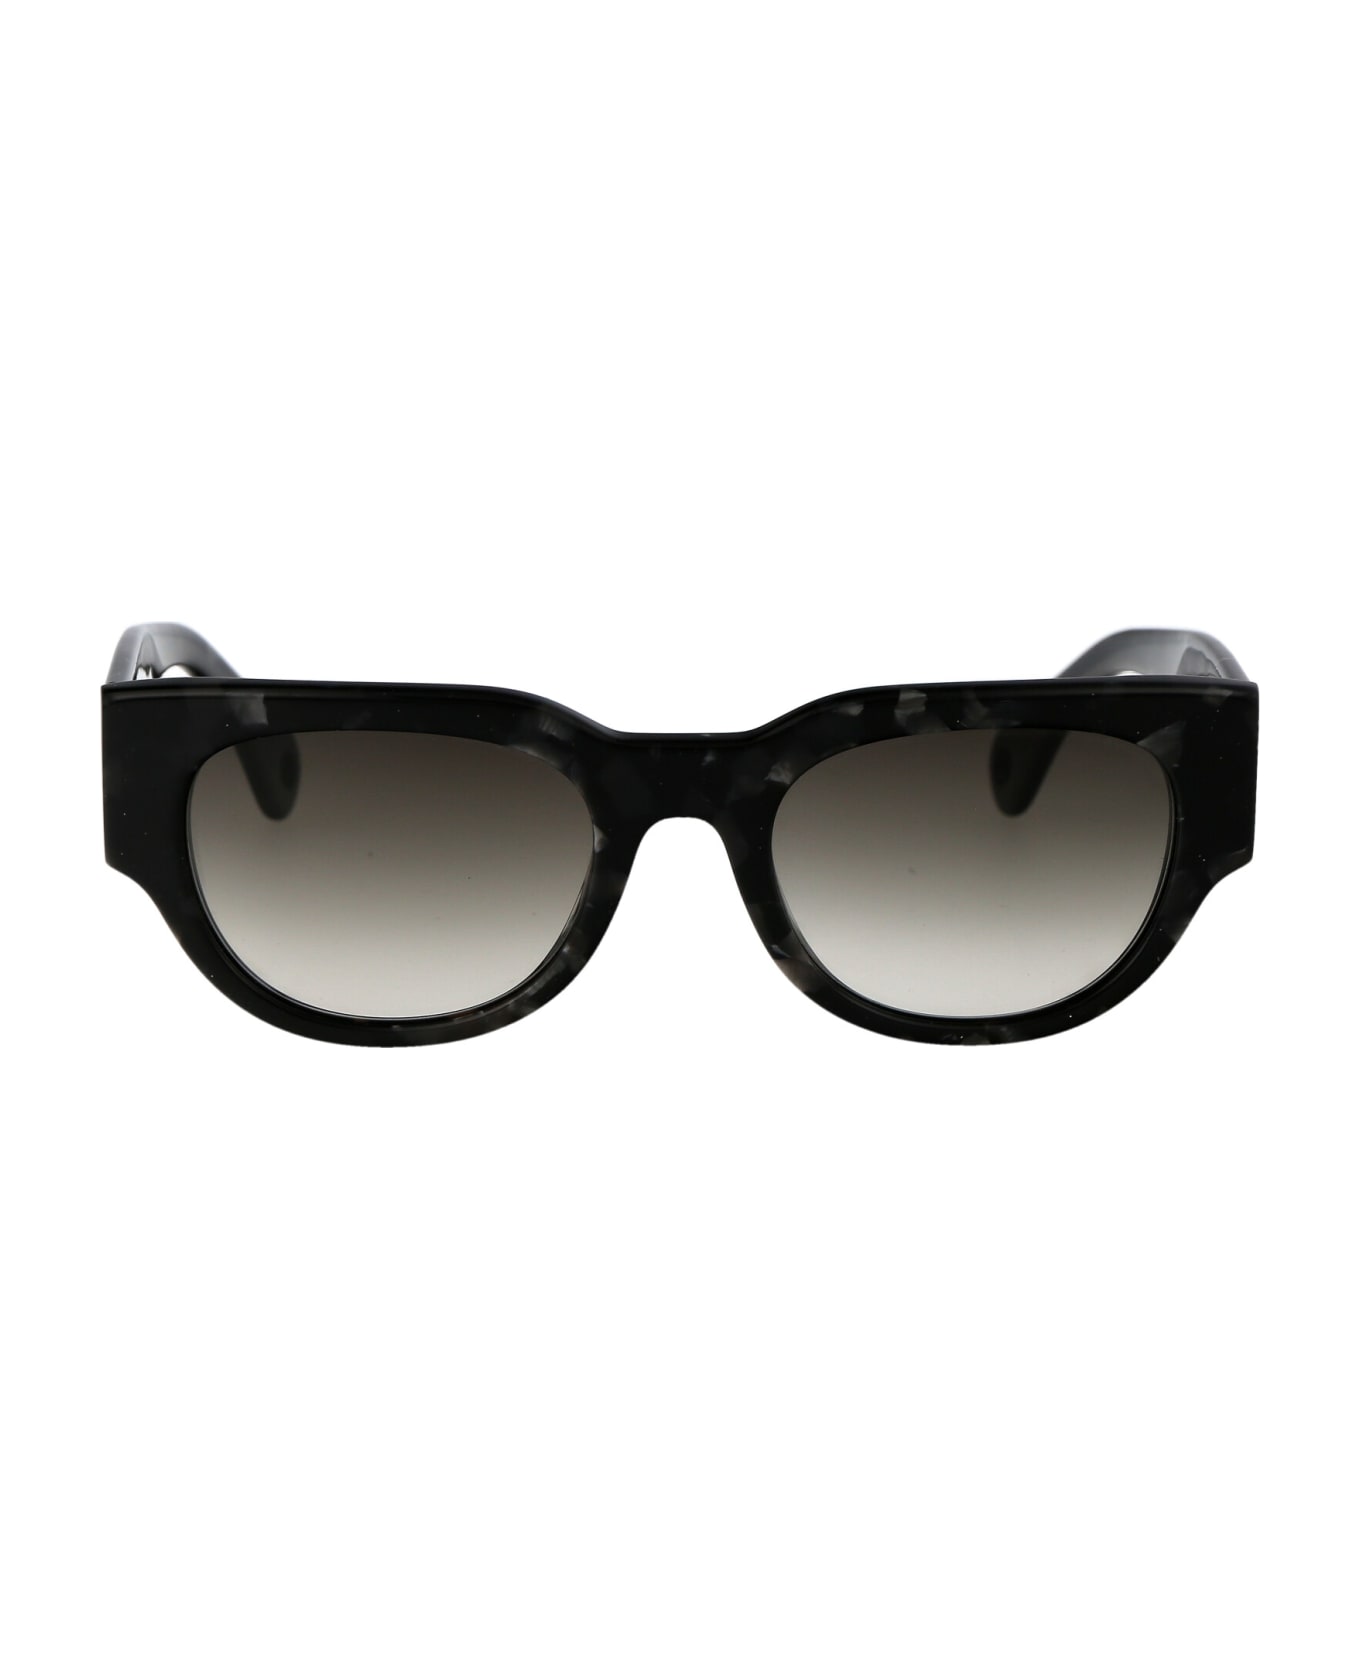 Lanvin Lnv670s Sunglasses - 009 GREY TORTOISE